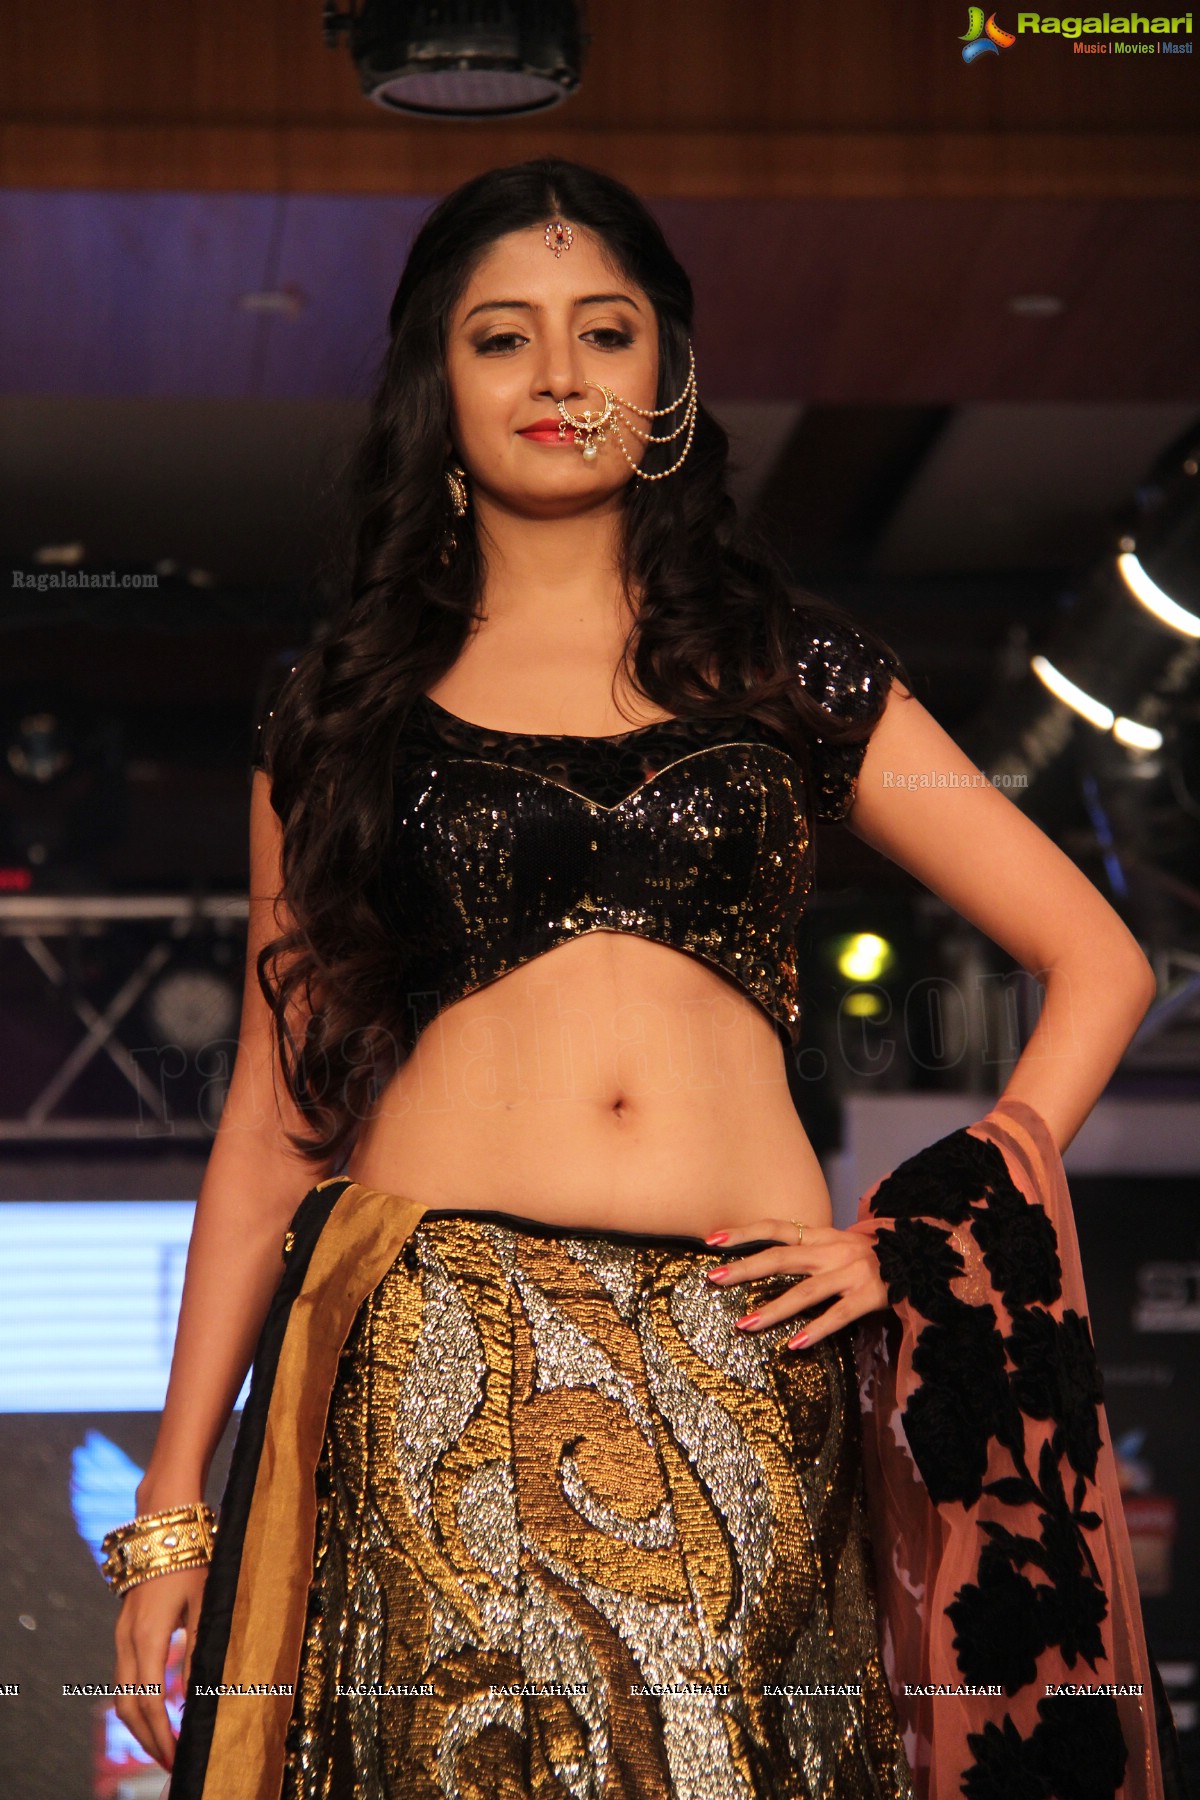 Kingfisher Ultra Hyderabad International Fashion Week 2013 (Day 1)